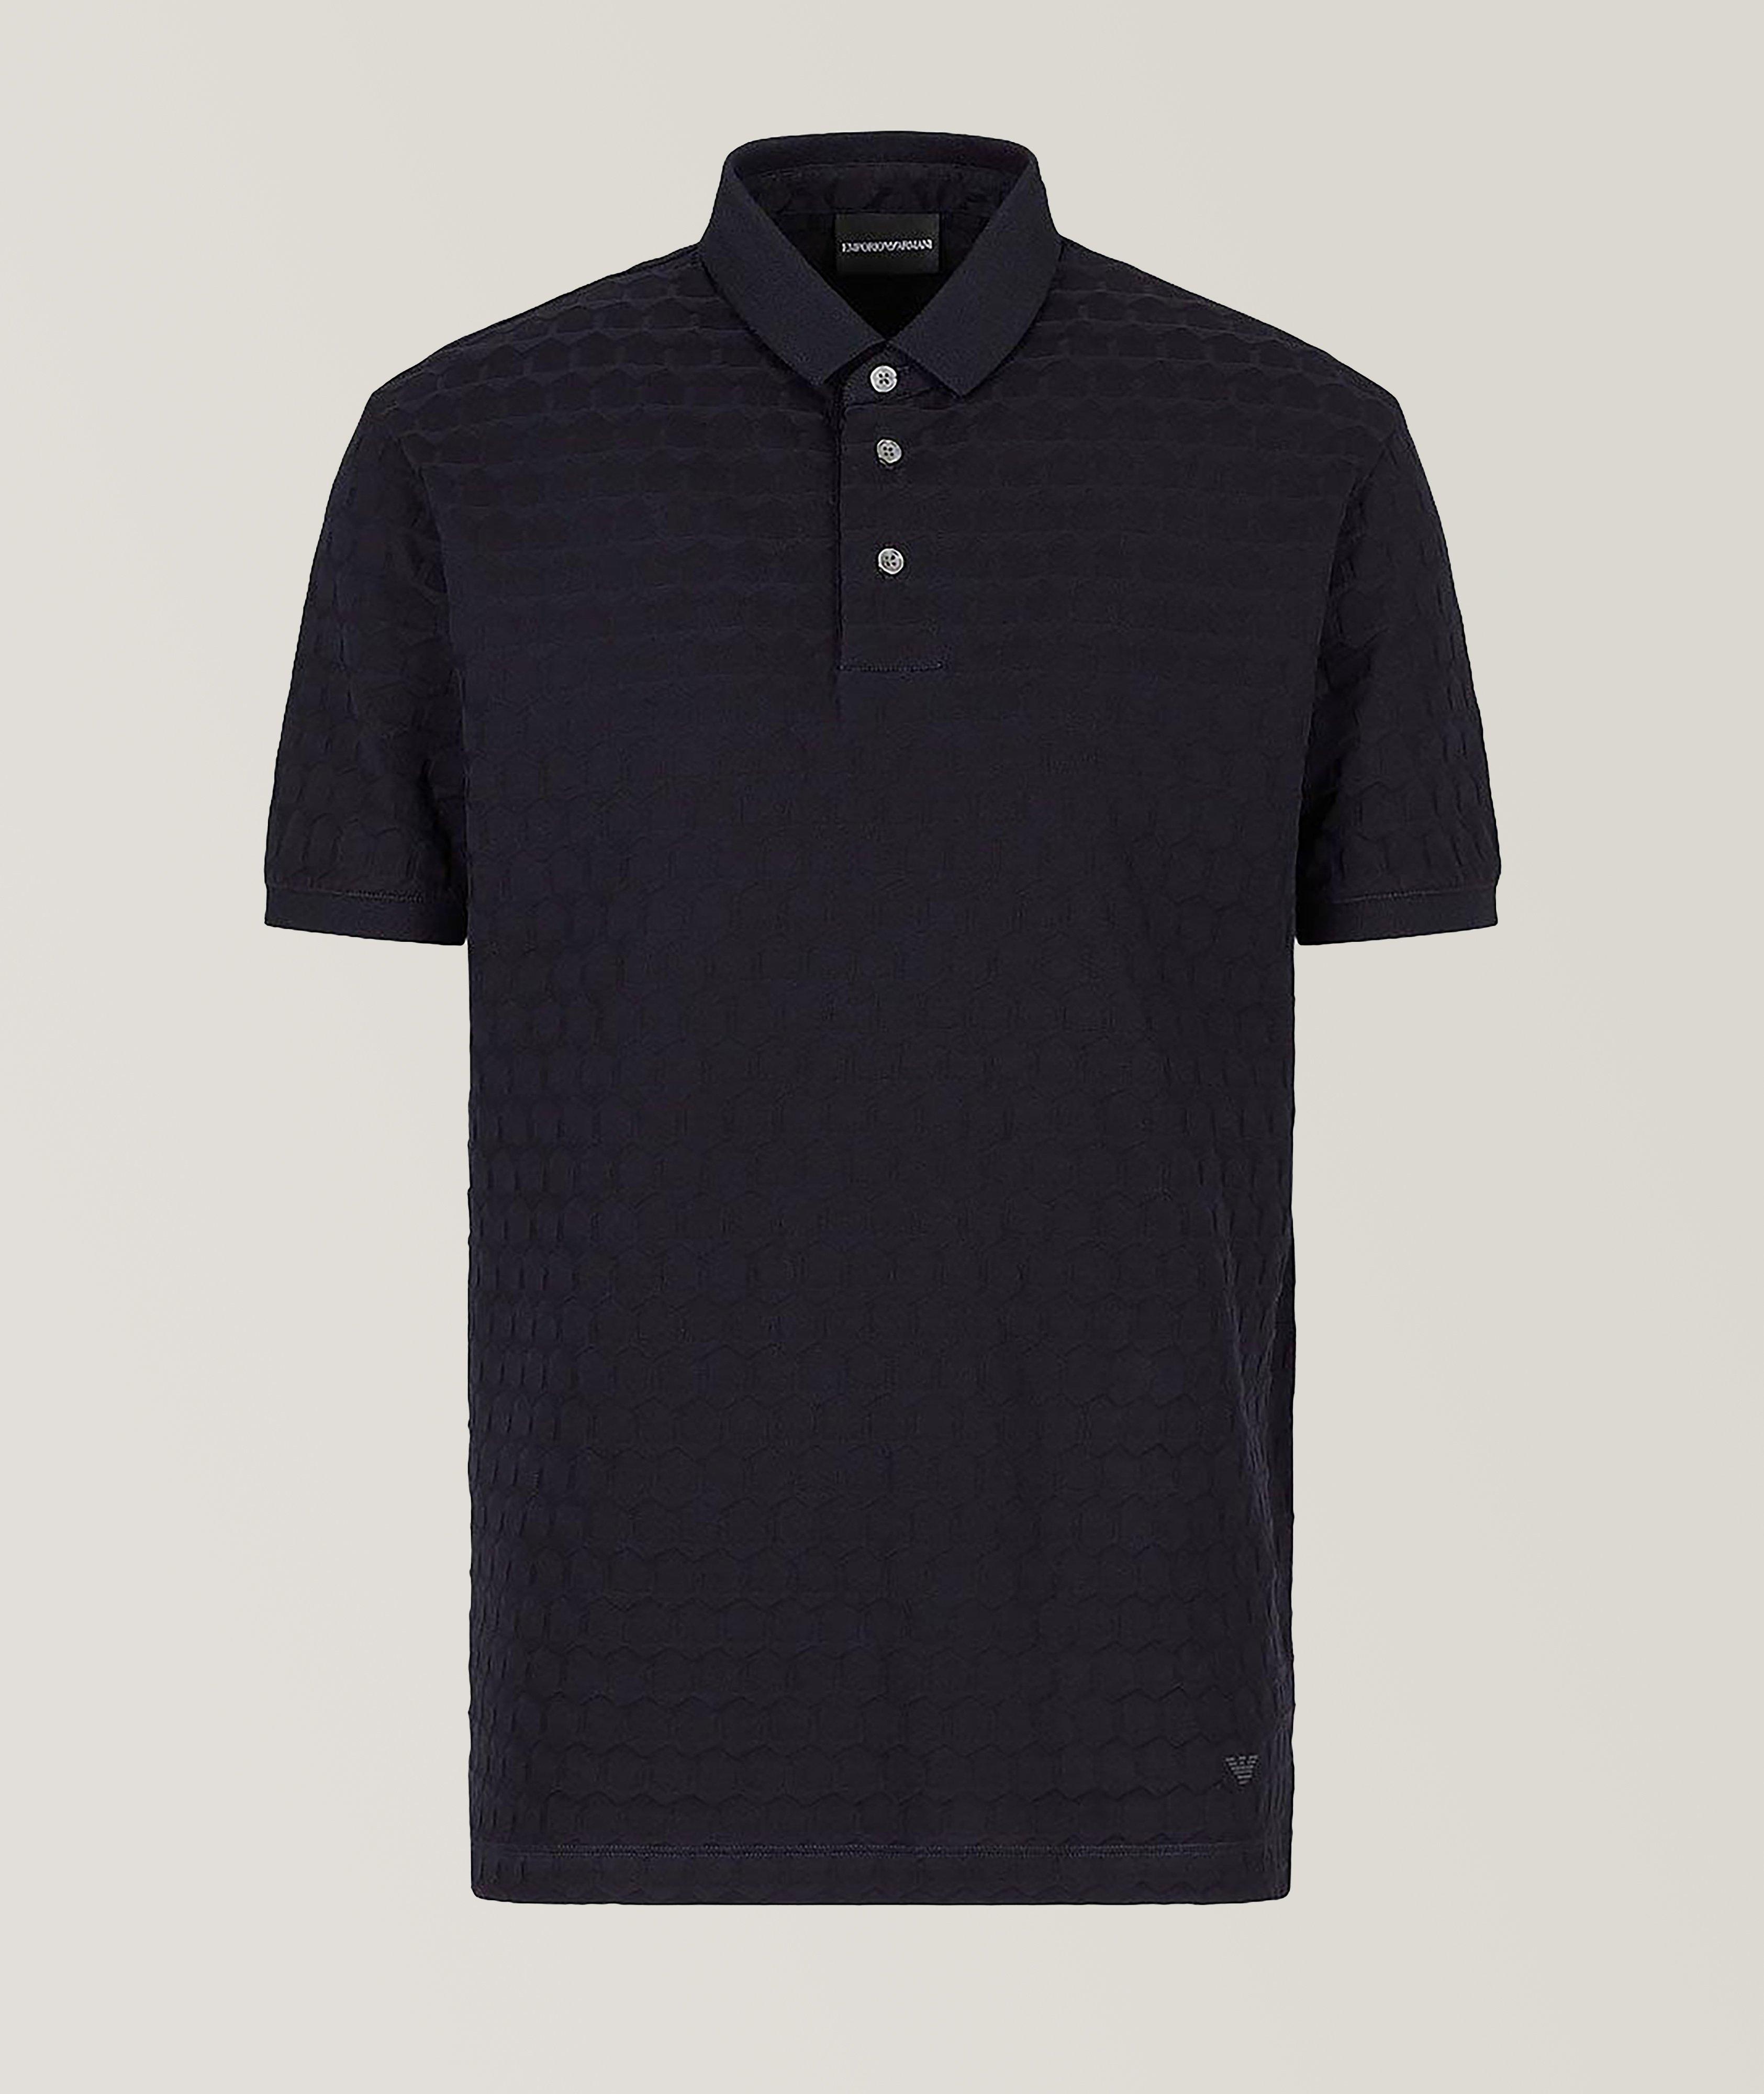 Jersey Polo Shirt  image 0